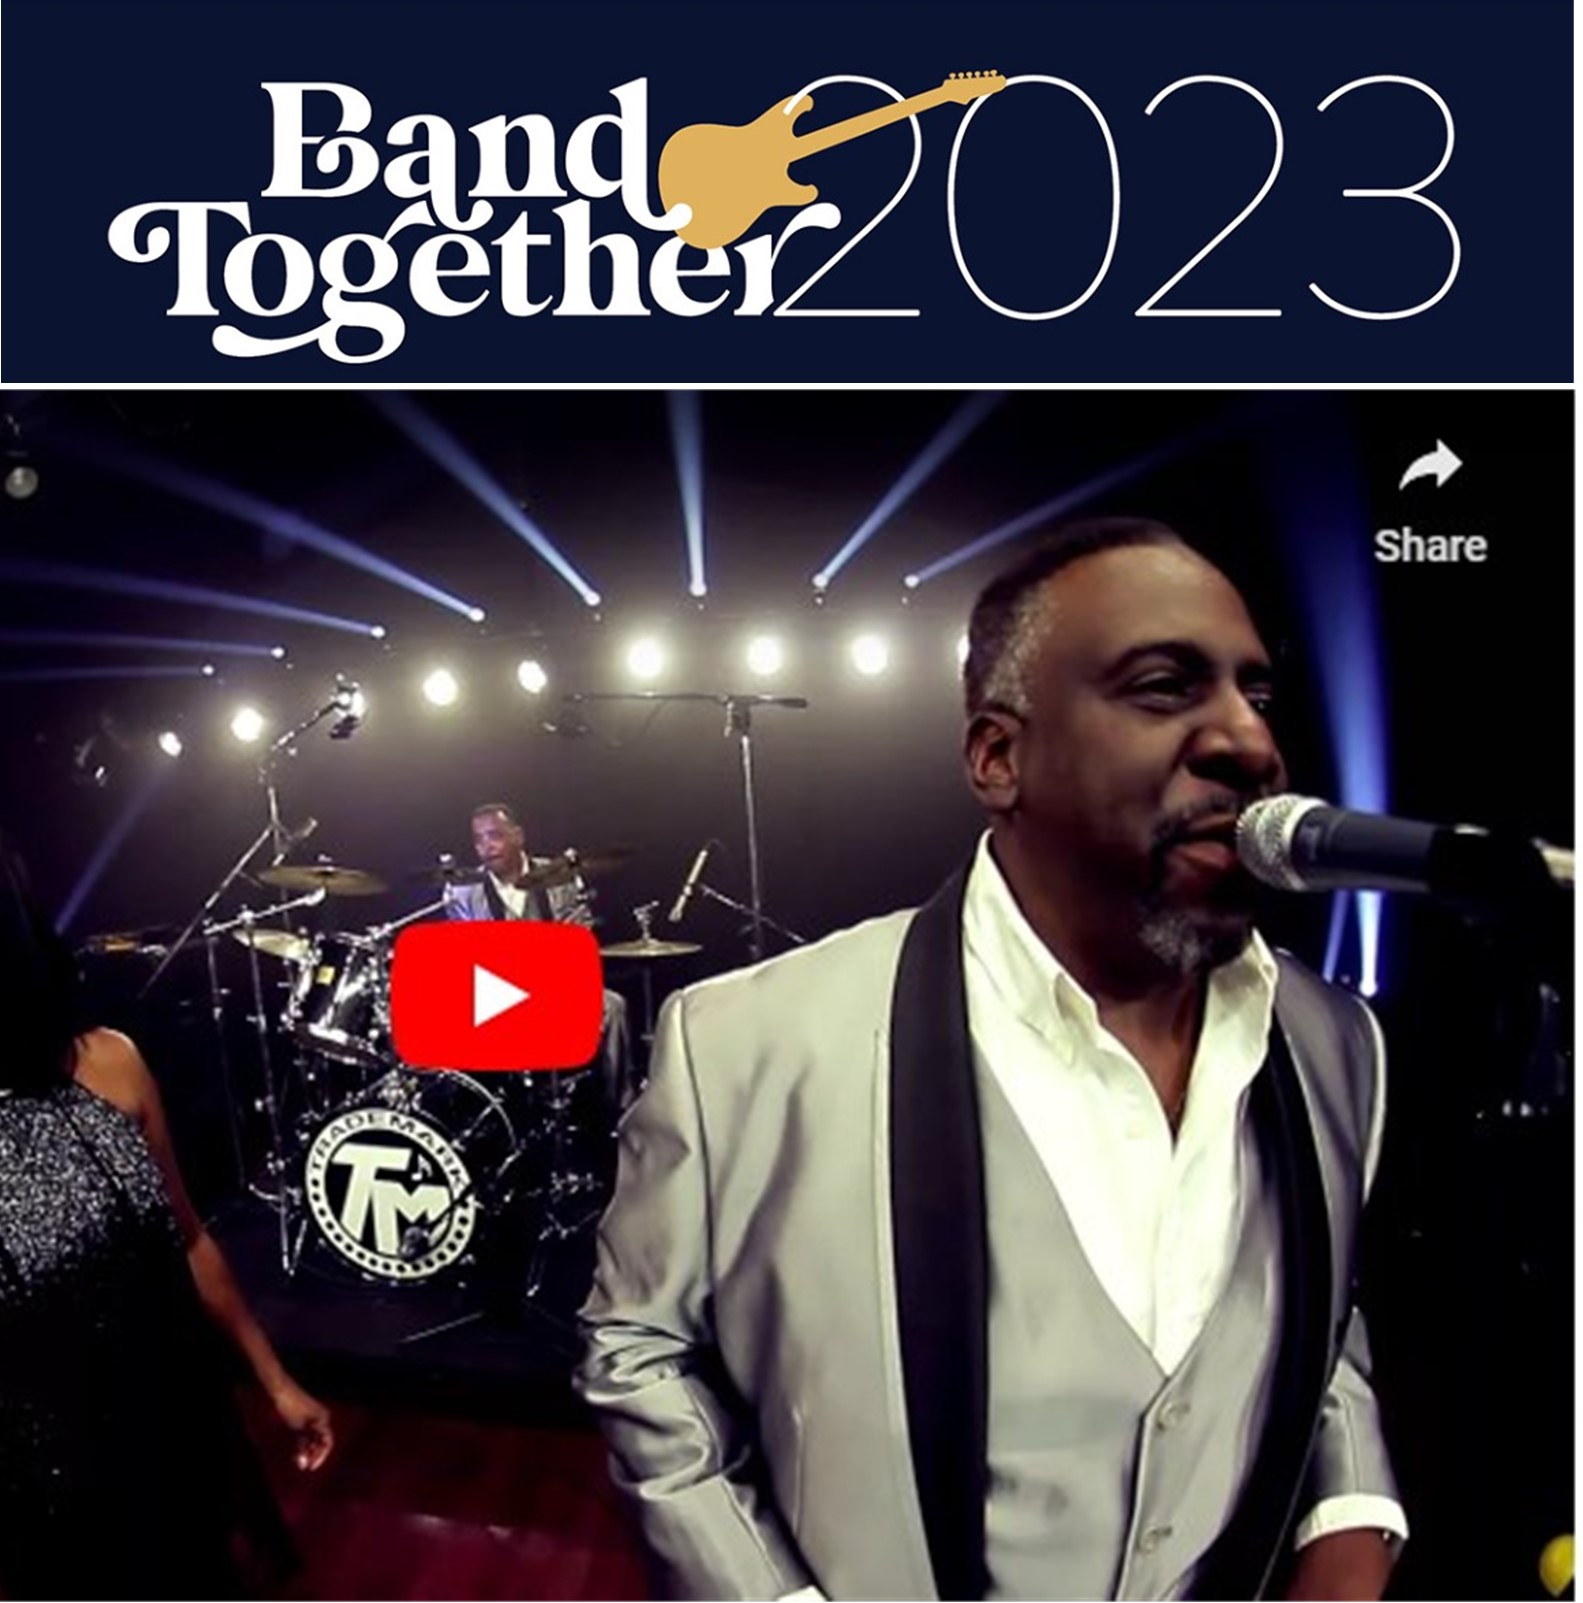 Band Together 2023